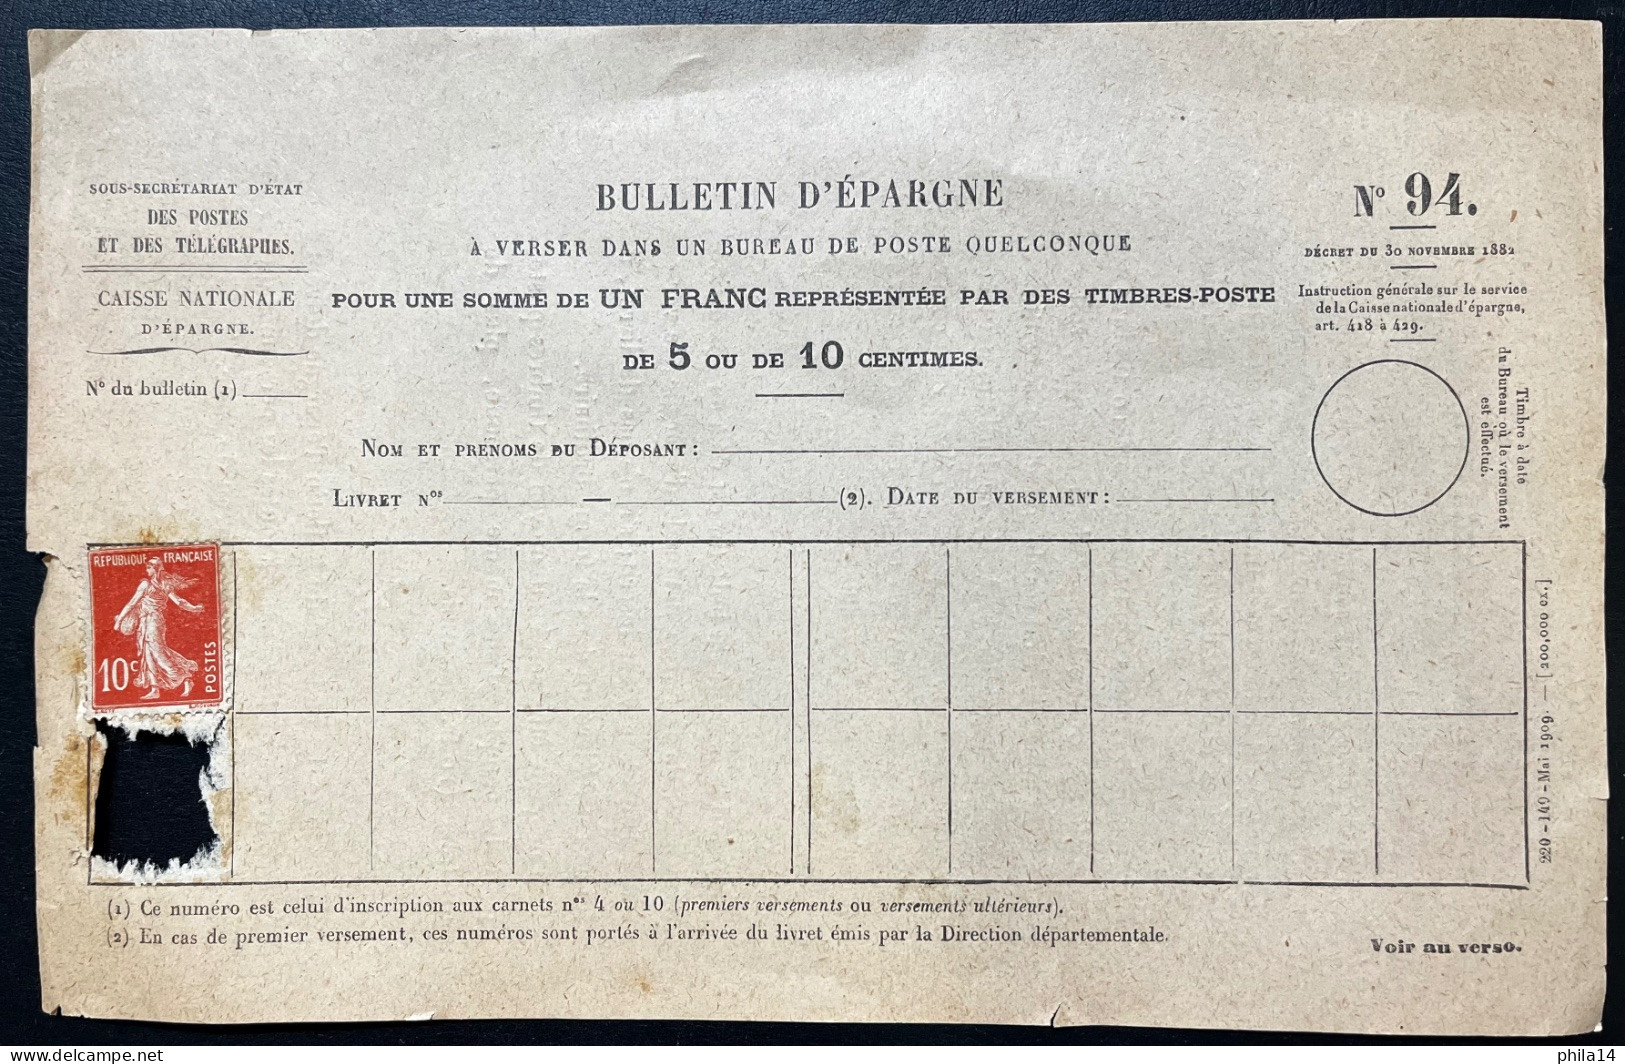 1X 10c SEMEUSE NEUF SUR BULLETIN D'EPARGNE POSTES ET TELEGRAPHES N°94 - Documents Of Postal Services